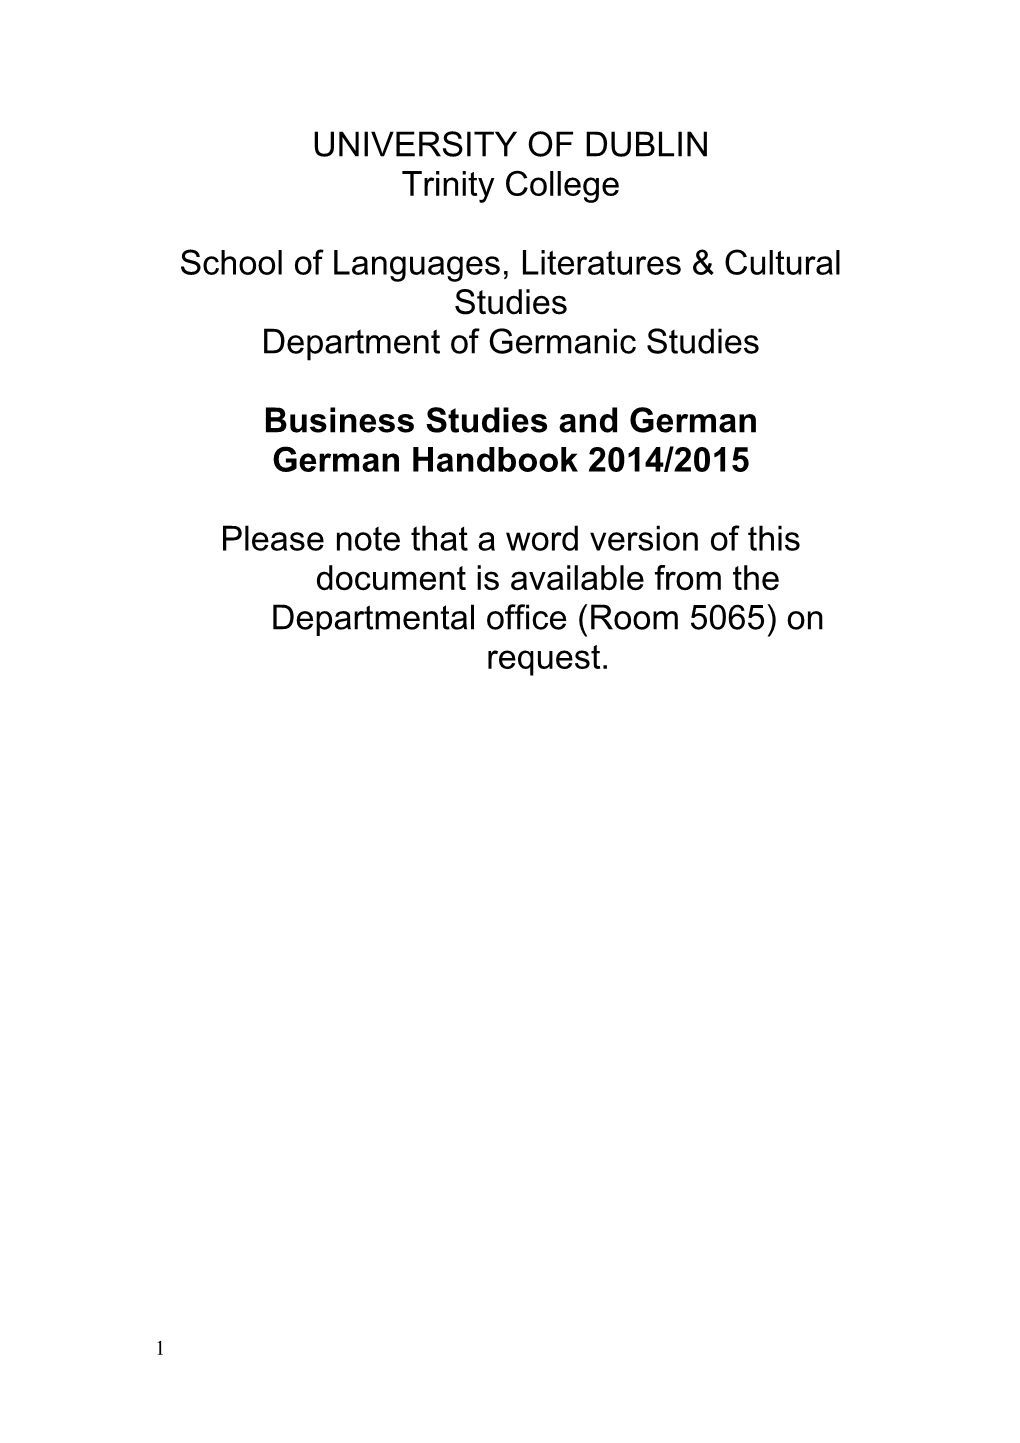 School of Languages, Literatures & Cultural Studies